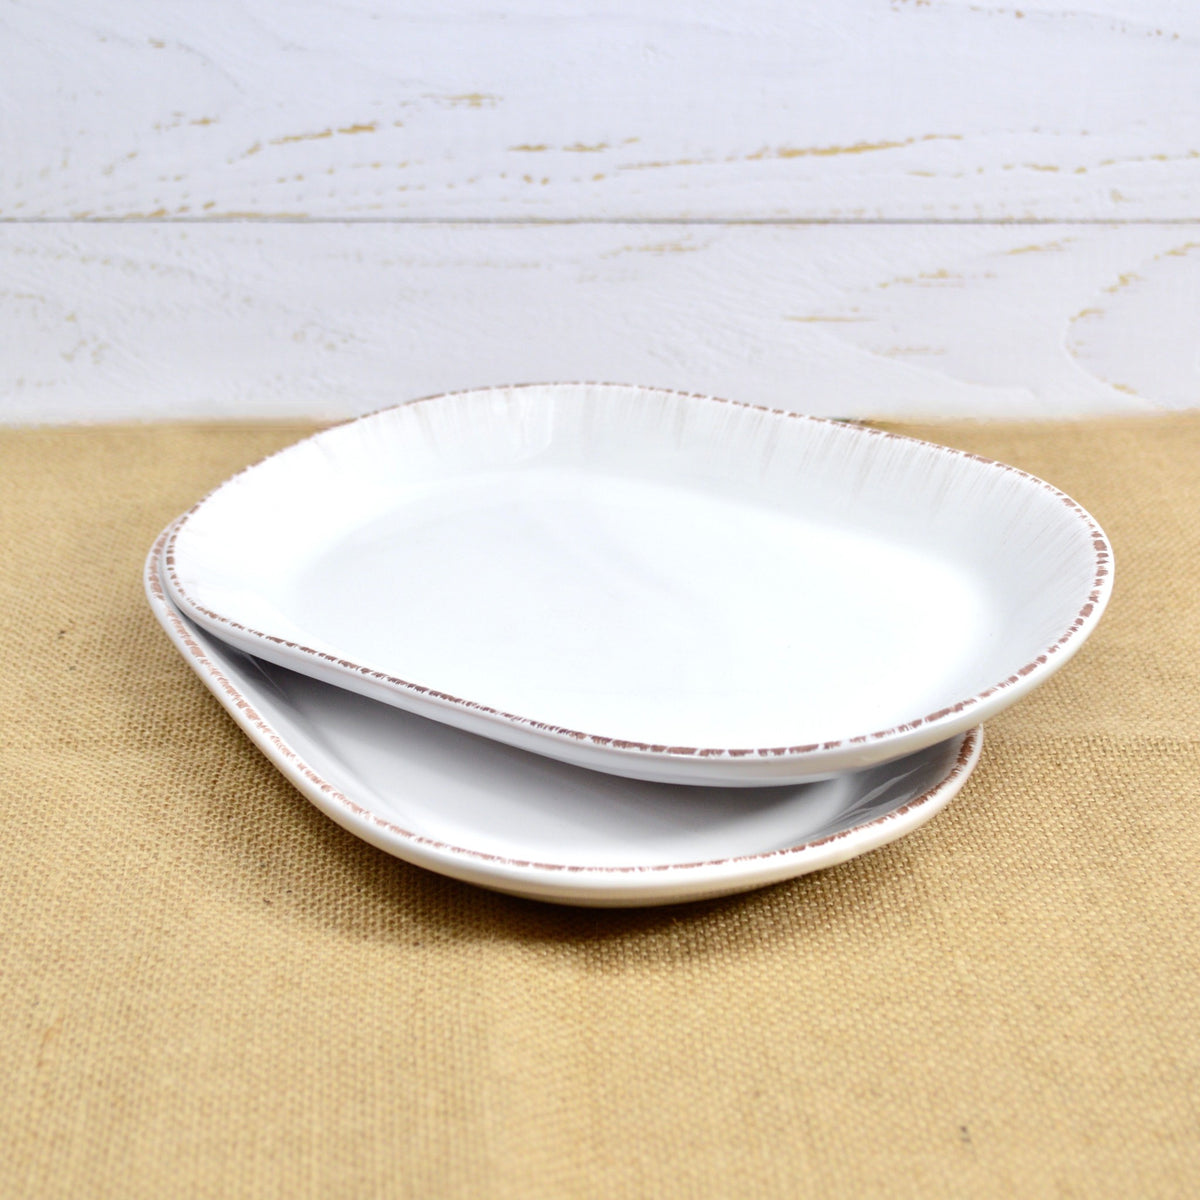 Tuscan Ceramic Oval Plates, Set of 2, Made in Italy - My Italian Decor